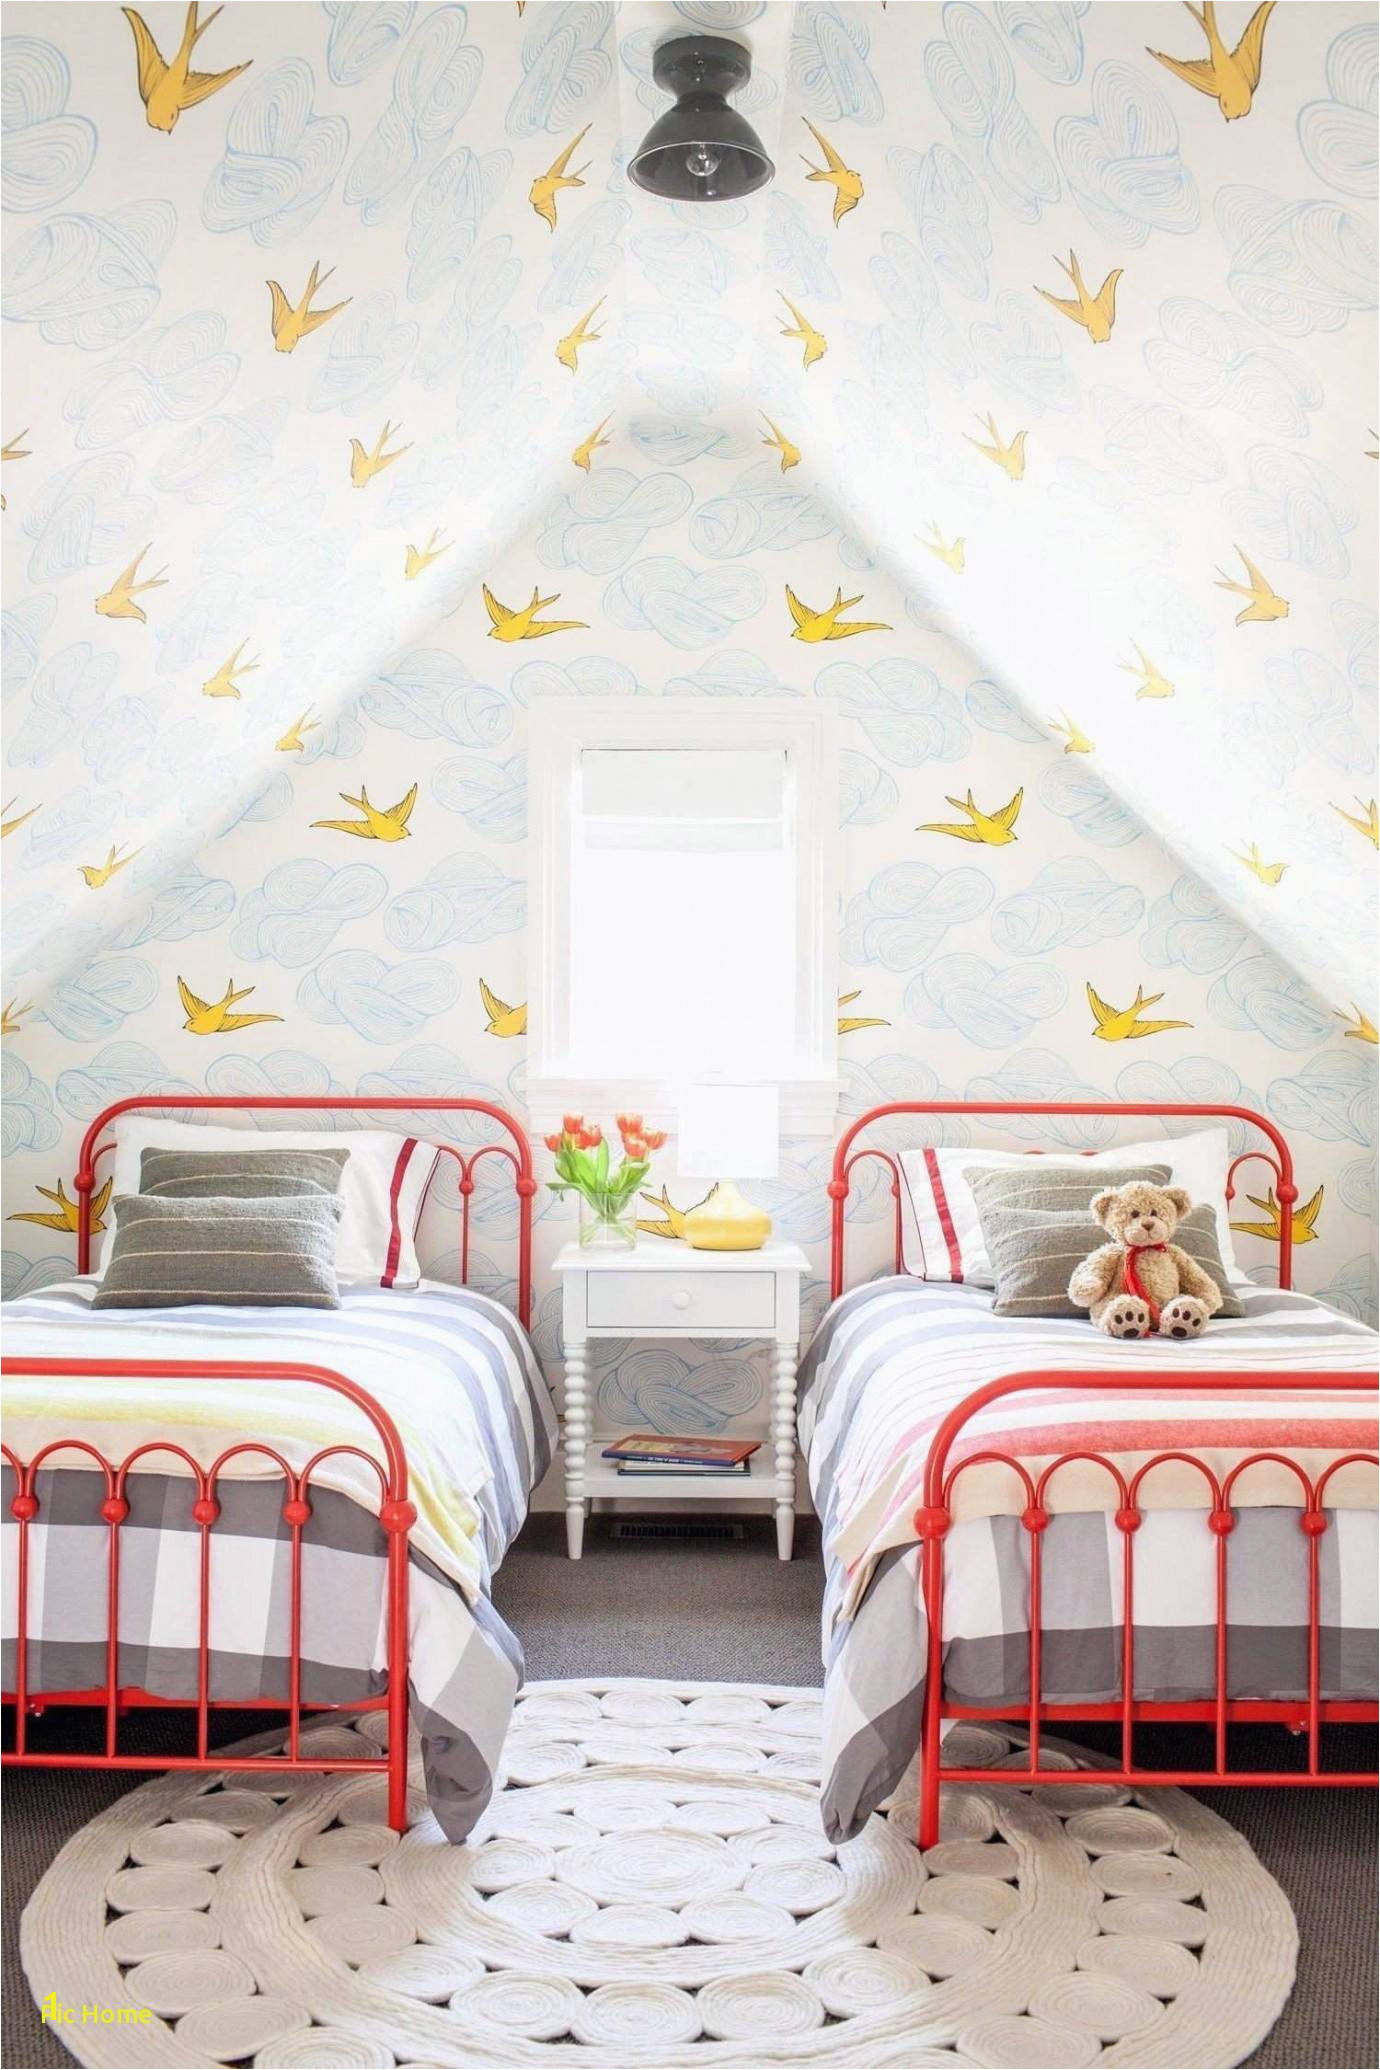 ¾vate · Baby Girl Room Decor orange and Grey Bedroom Ideas New Luxury Store Furniture 0d